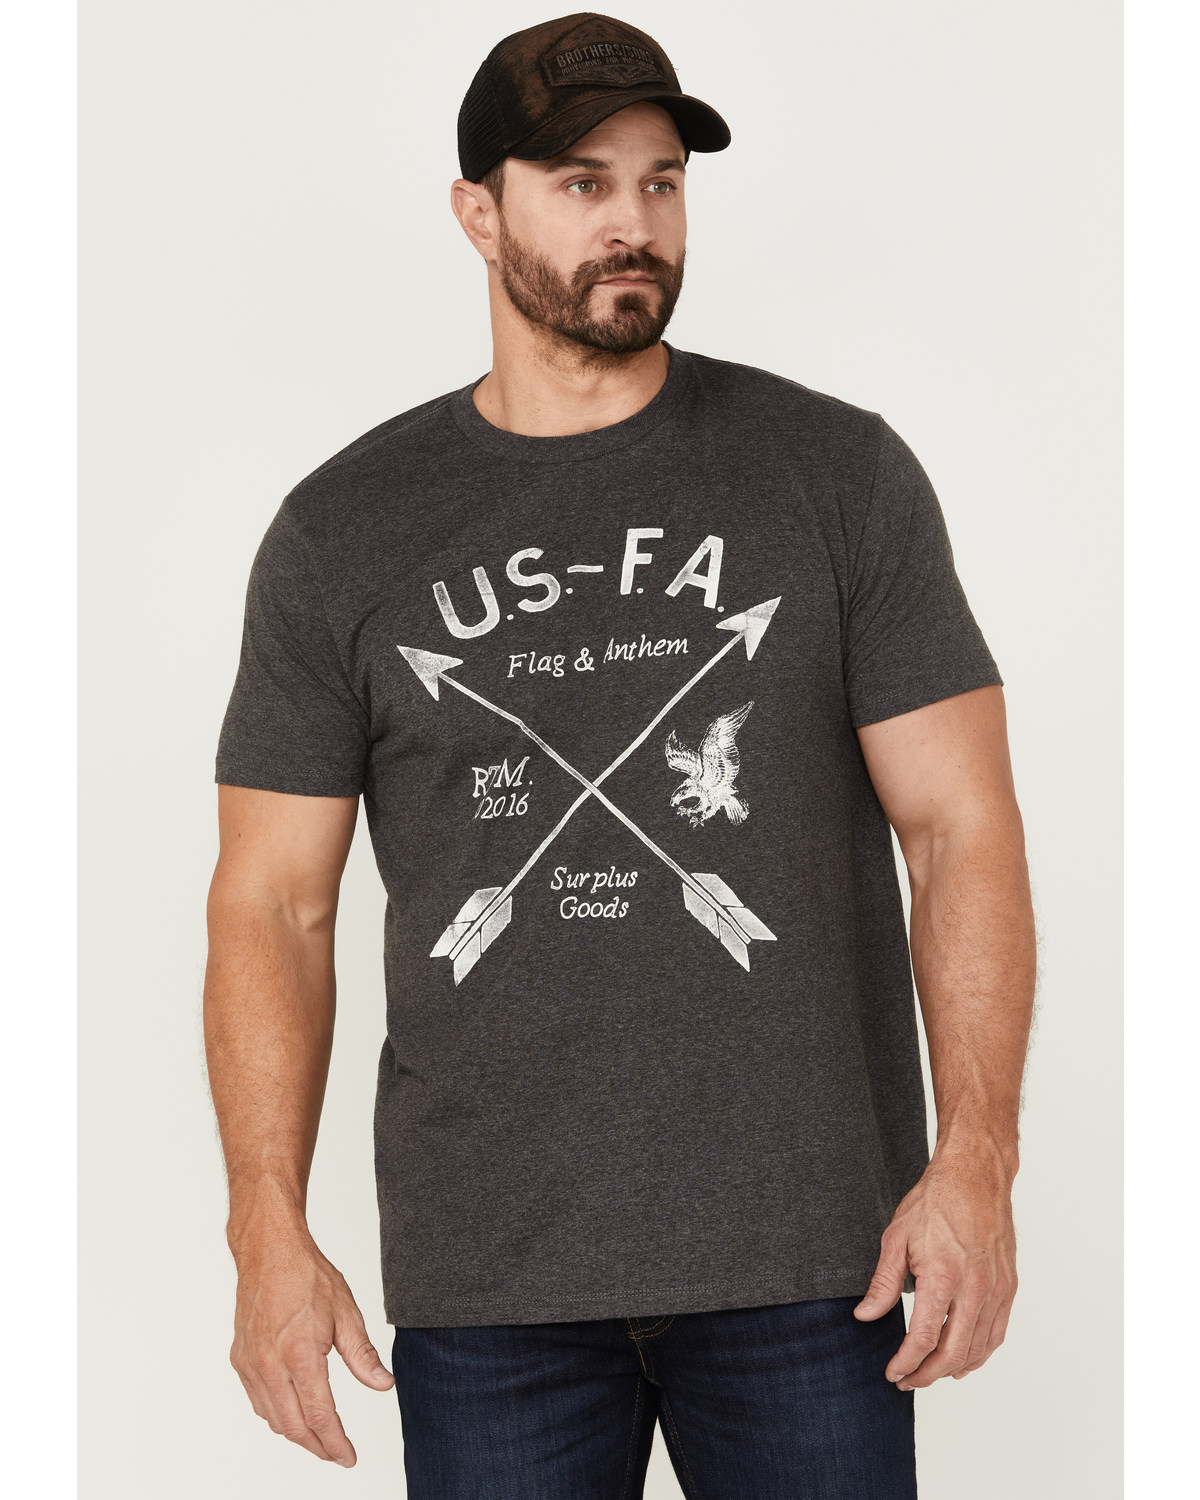 Flag & Anthem Men's Surplus Goods Graphic T-Shirt